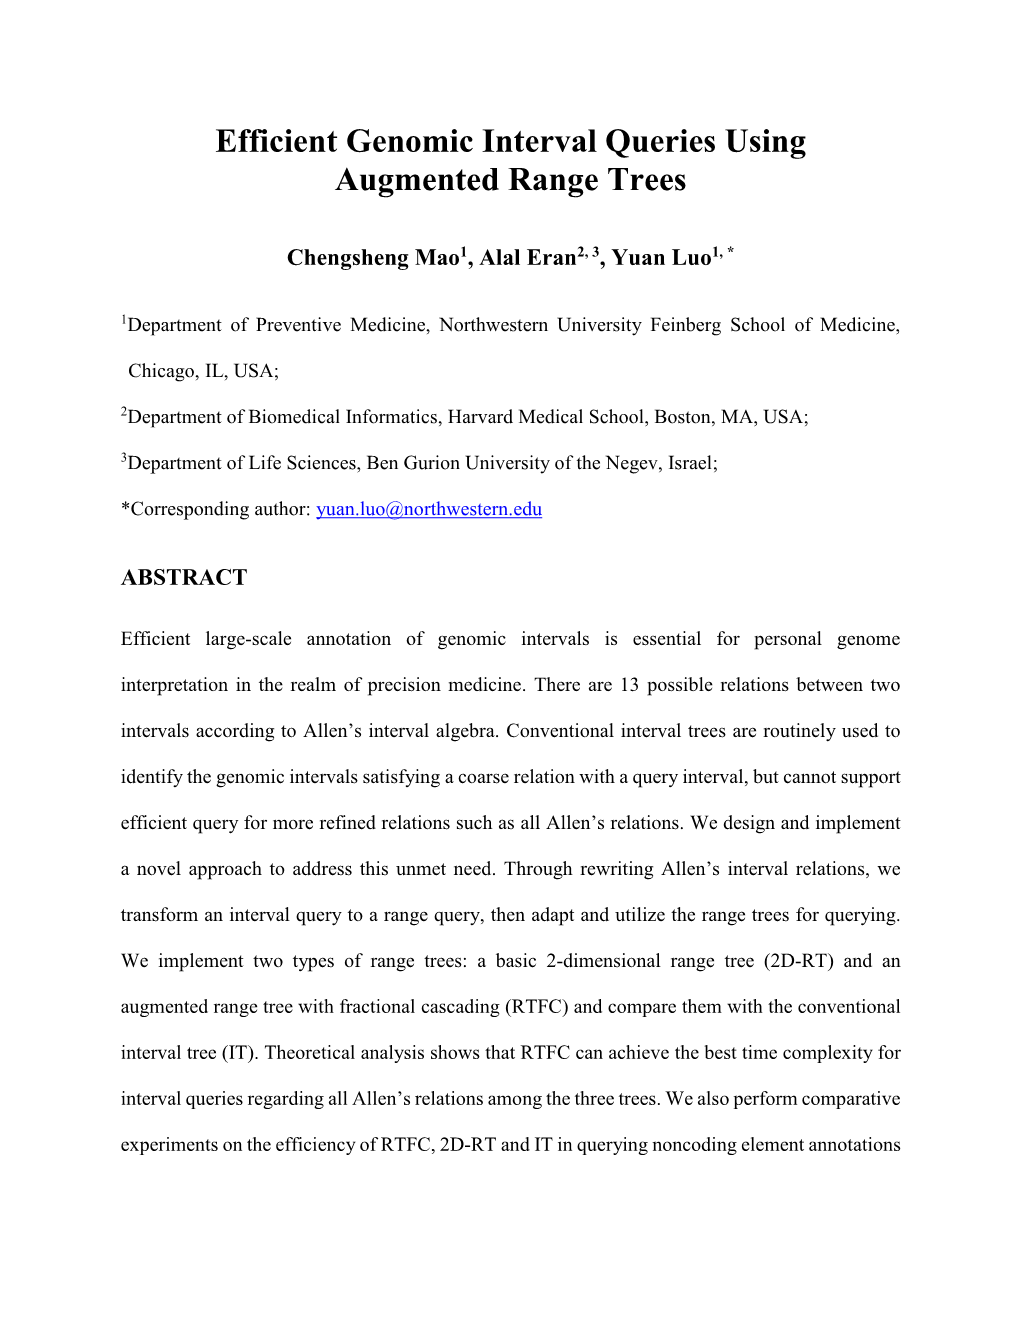 Efficient Genomic Interval Queries Using Augmented Range Trees